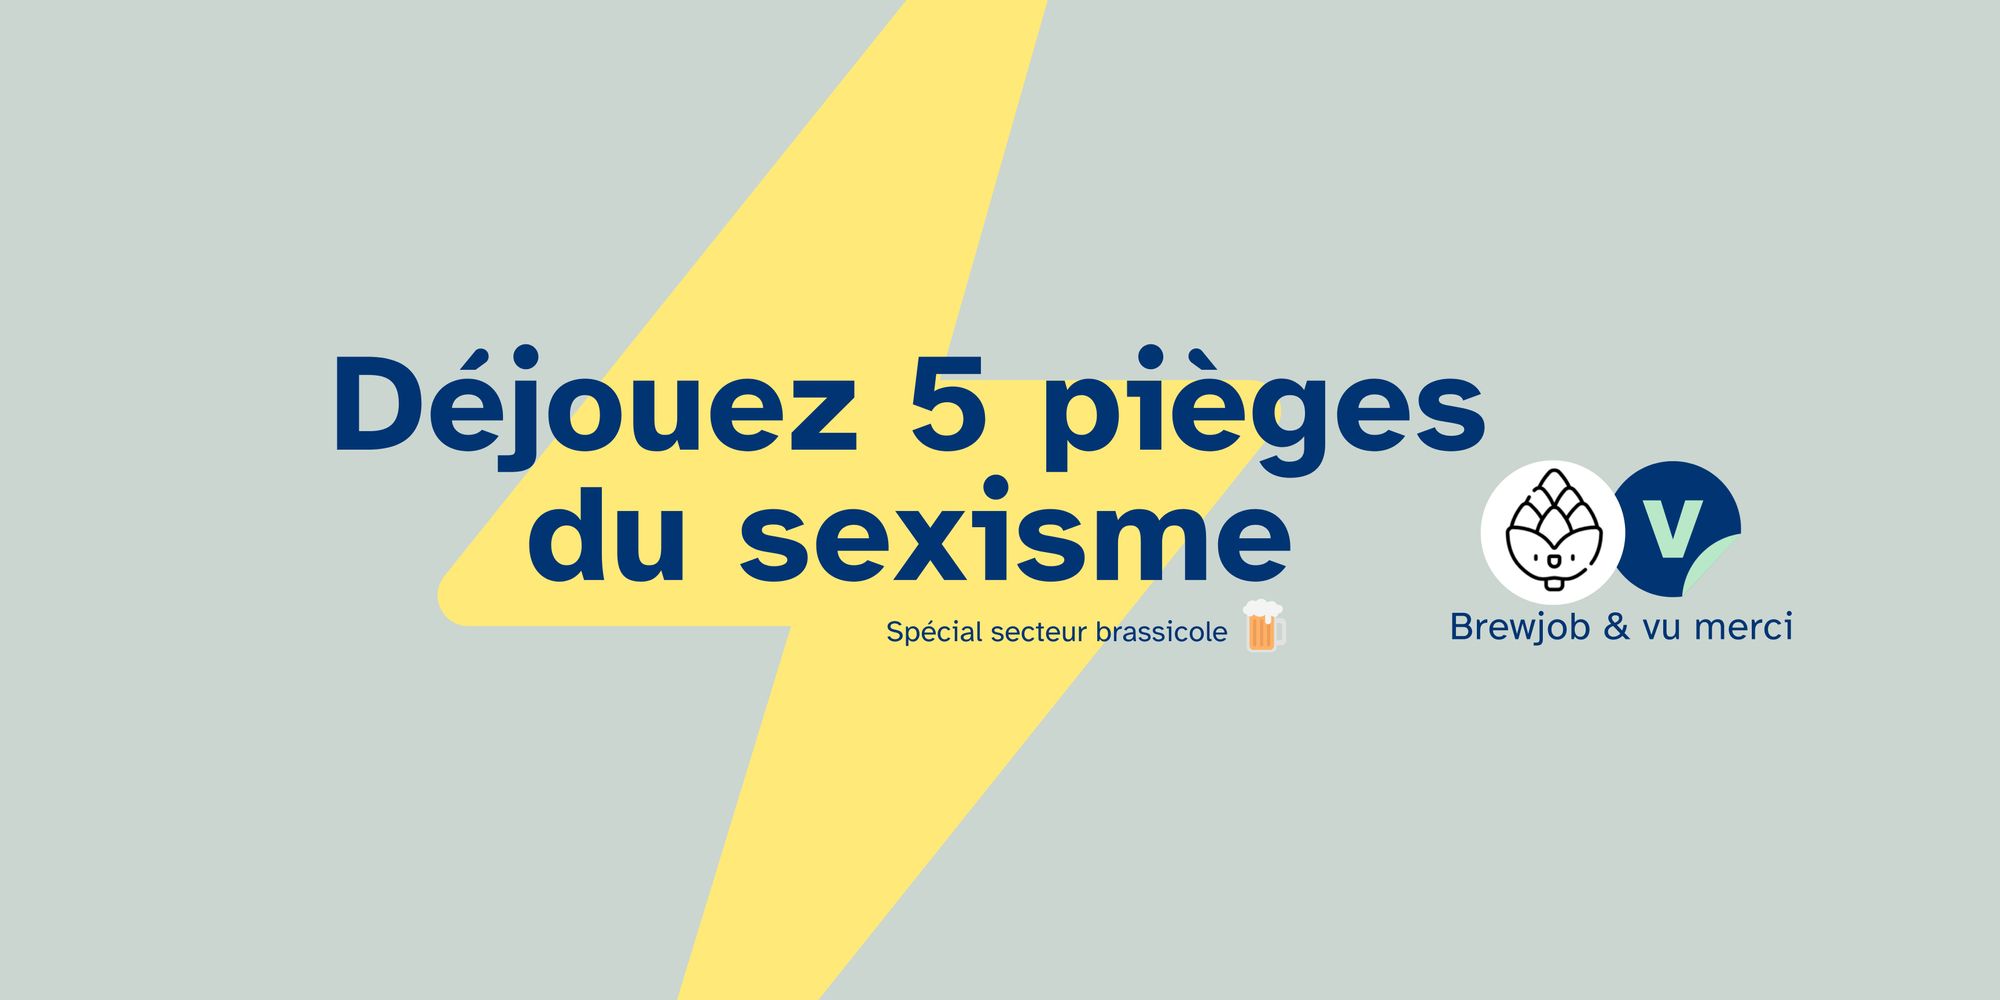 https://brewjob.vumerci.fr/5-pieges-sexisme-biere